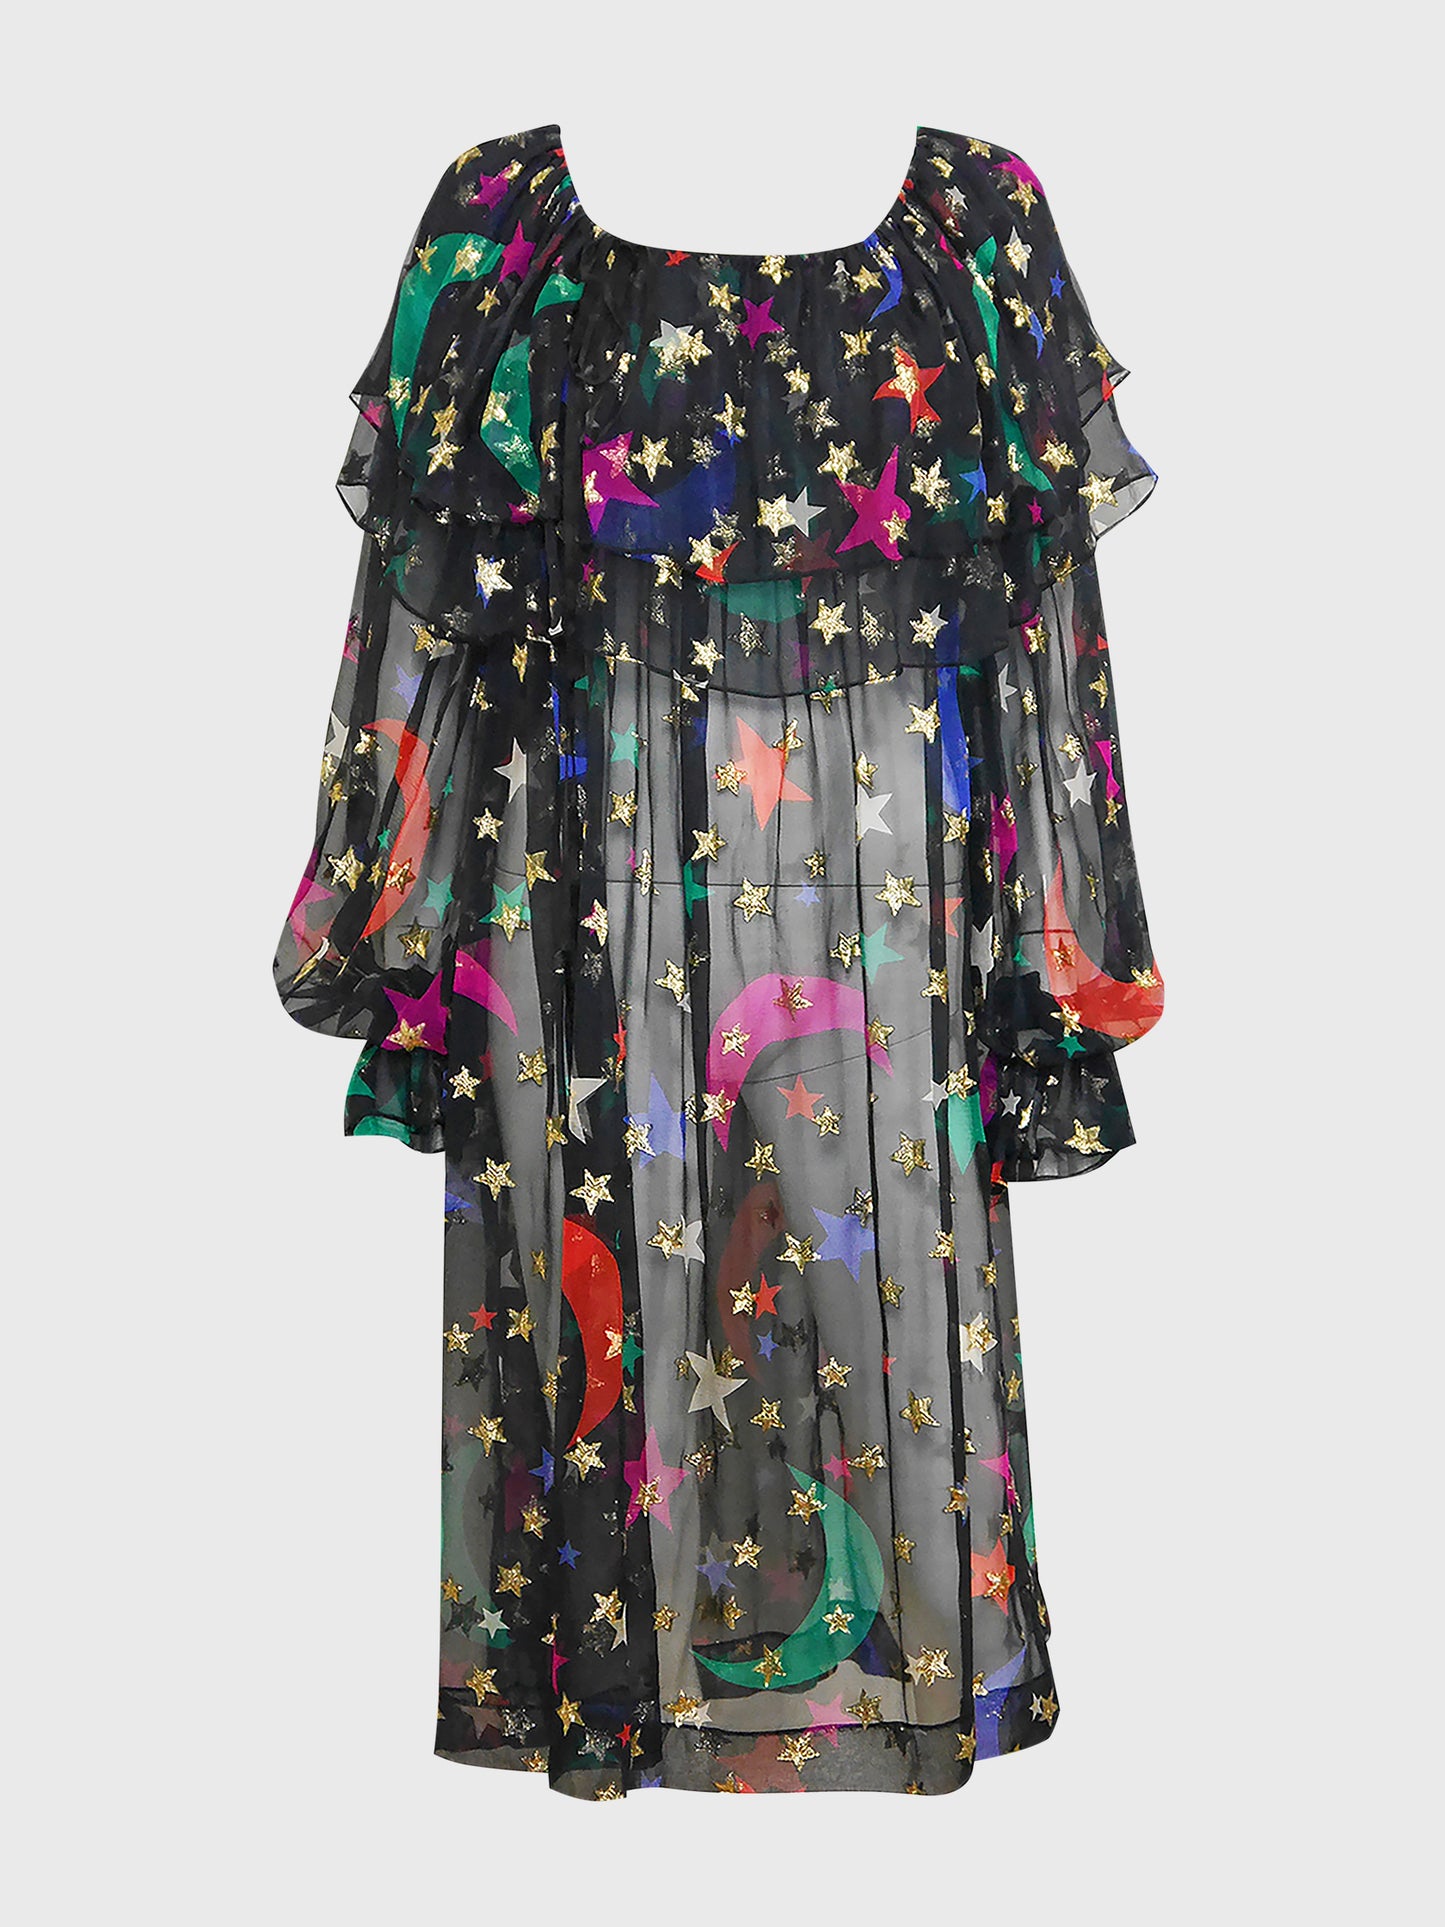 YVES SAINT LAURENT S/S 1979 Vintage Silk Dress Moon Star Print